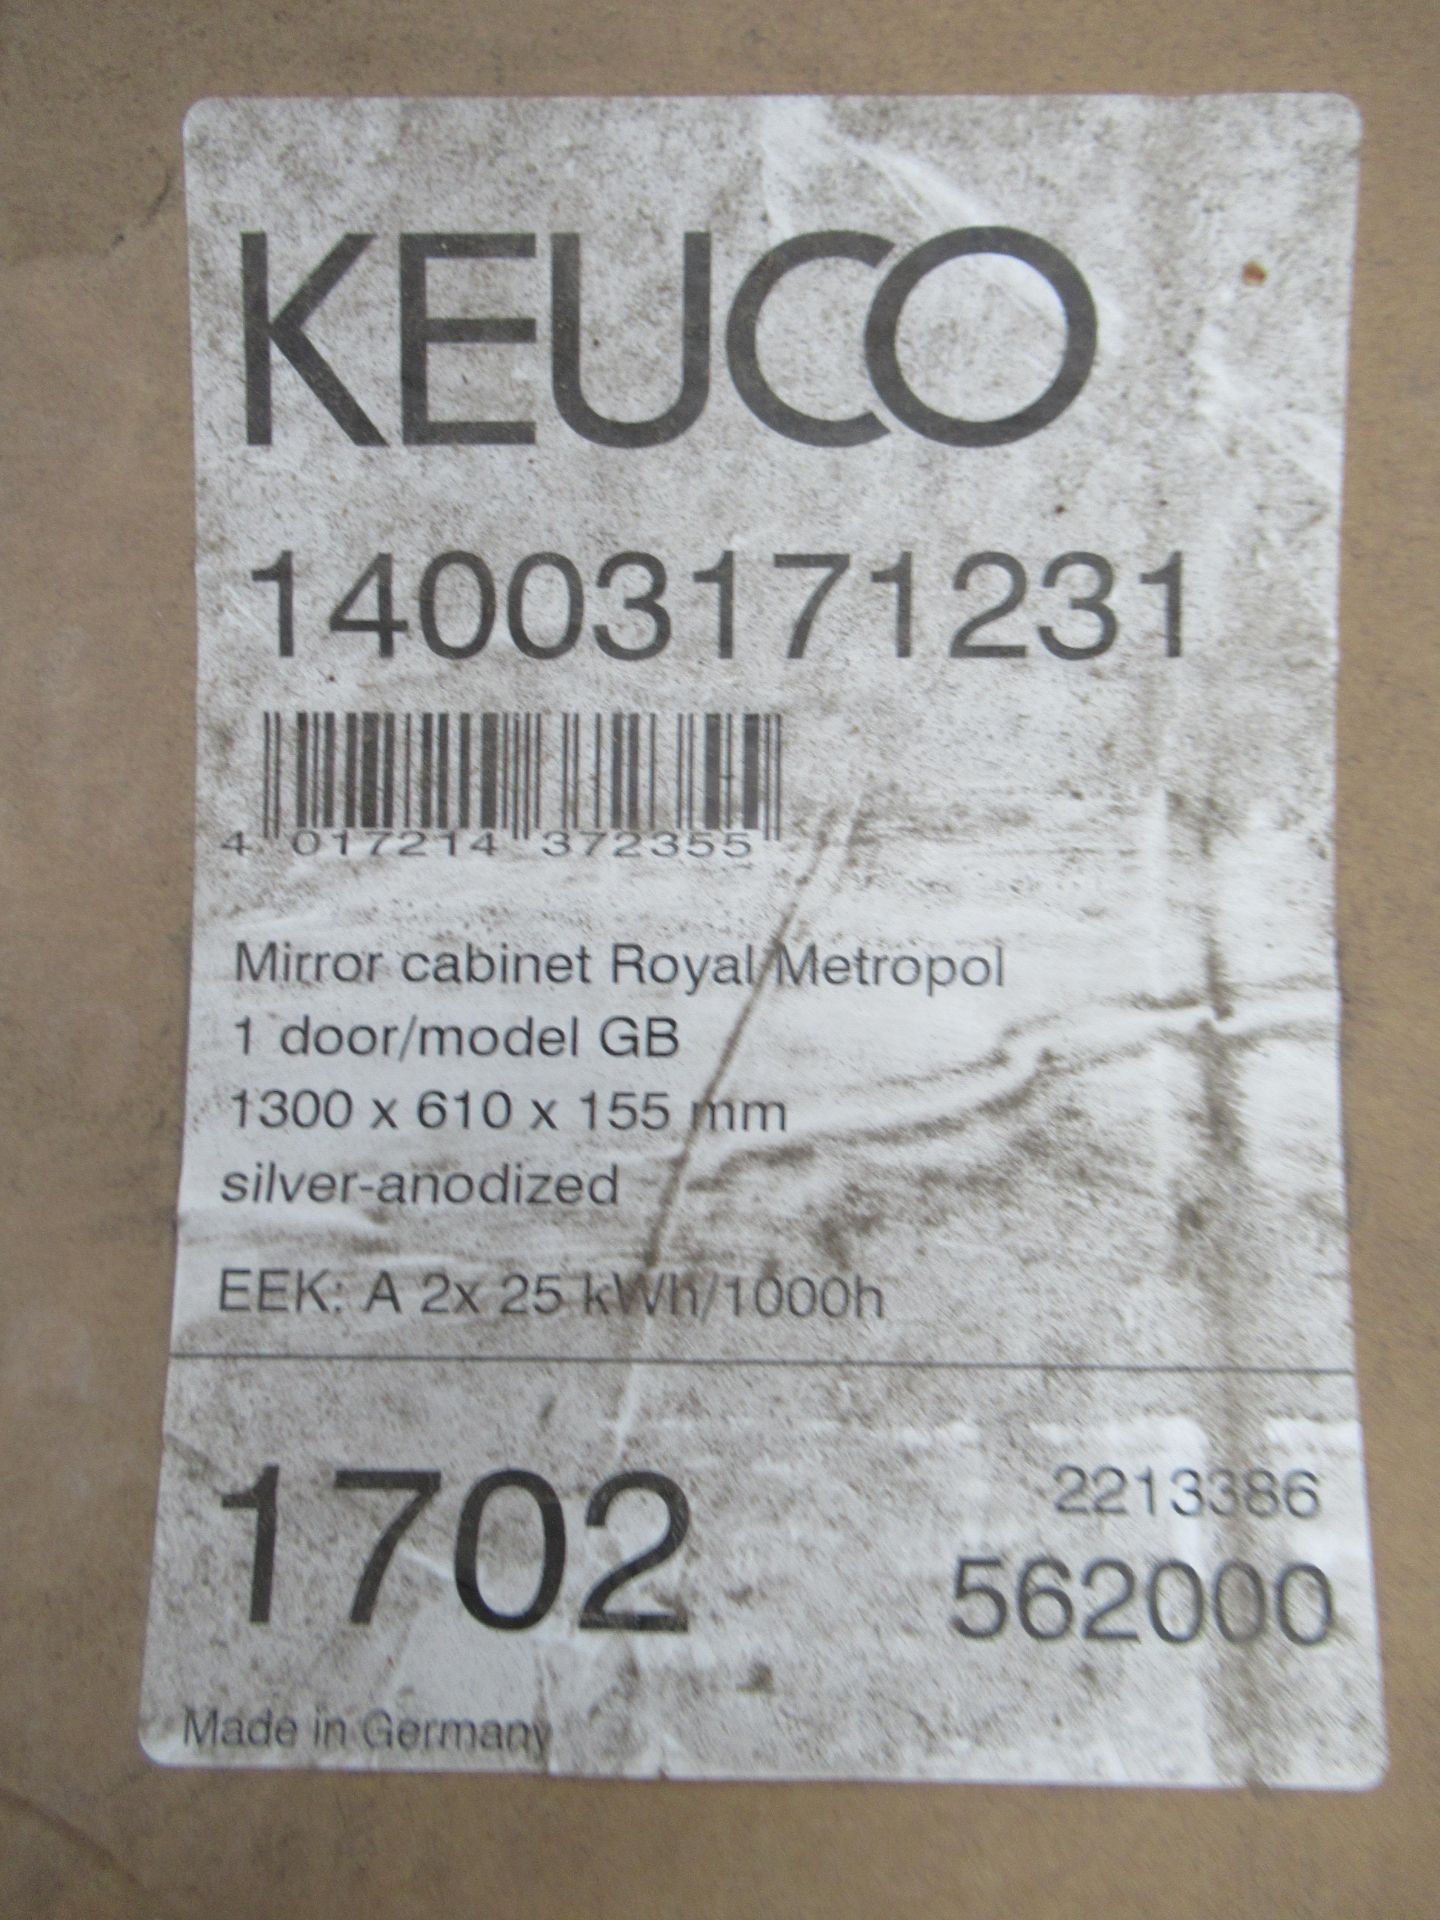 A Keuco Mirror Cabinet - Royal Metropol - Image 2 of 3